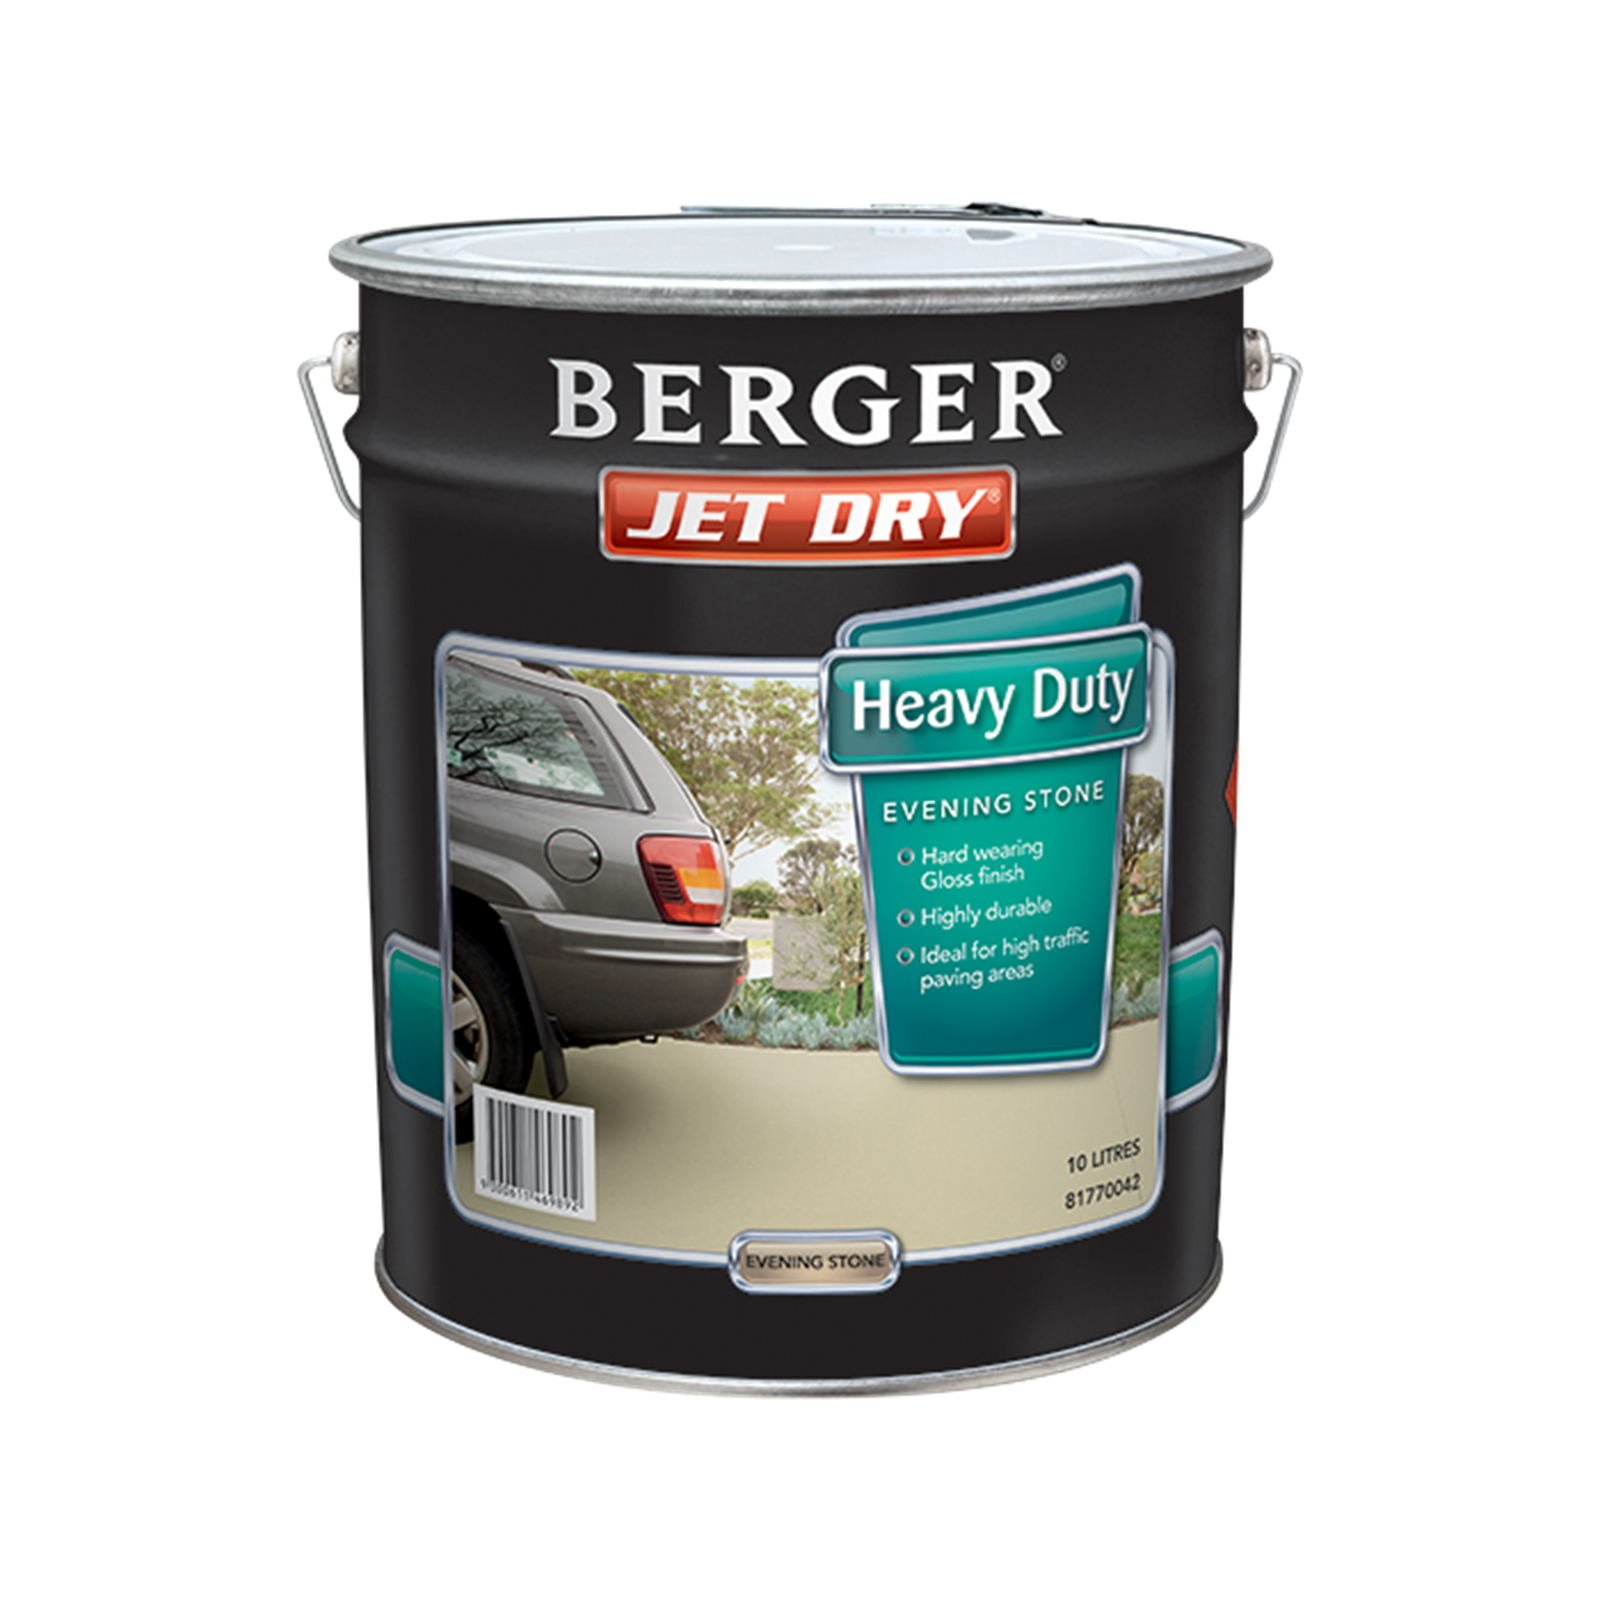 Berger Jet Dry 10L Heavy Duty Evening Stone Paving Paint